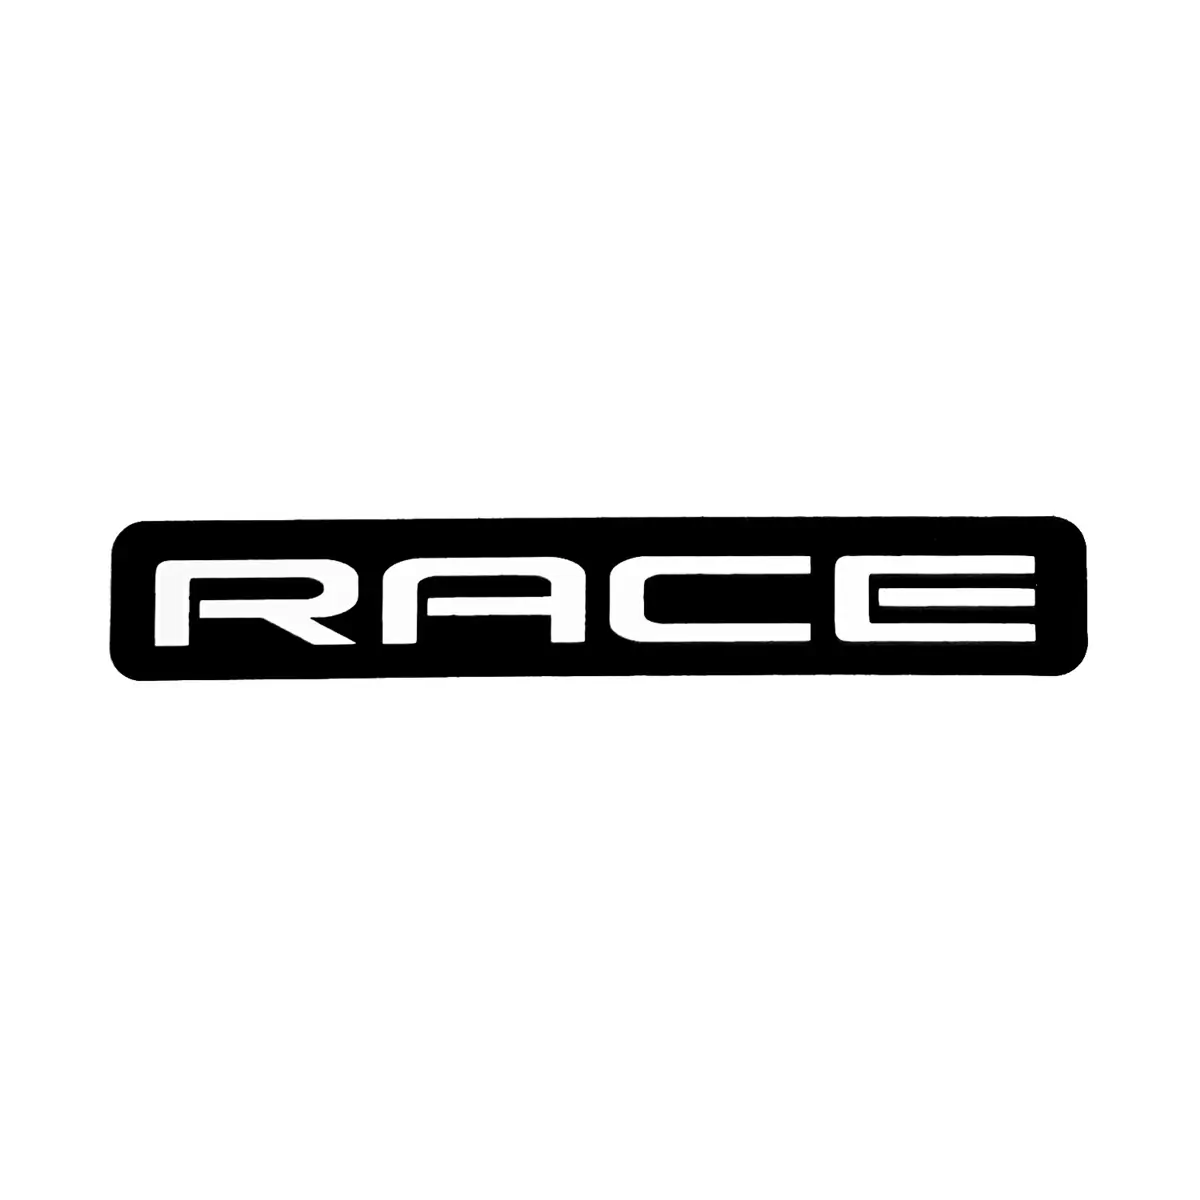 RACE Sticker Black/White - image